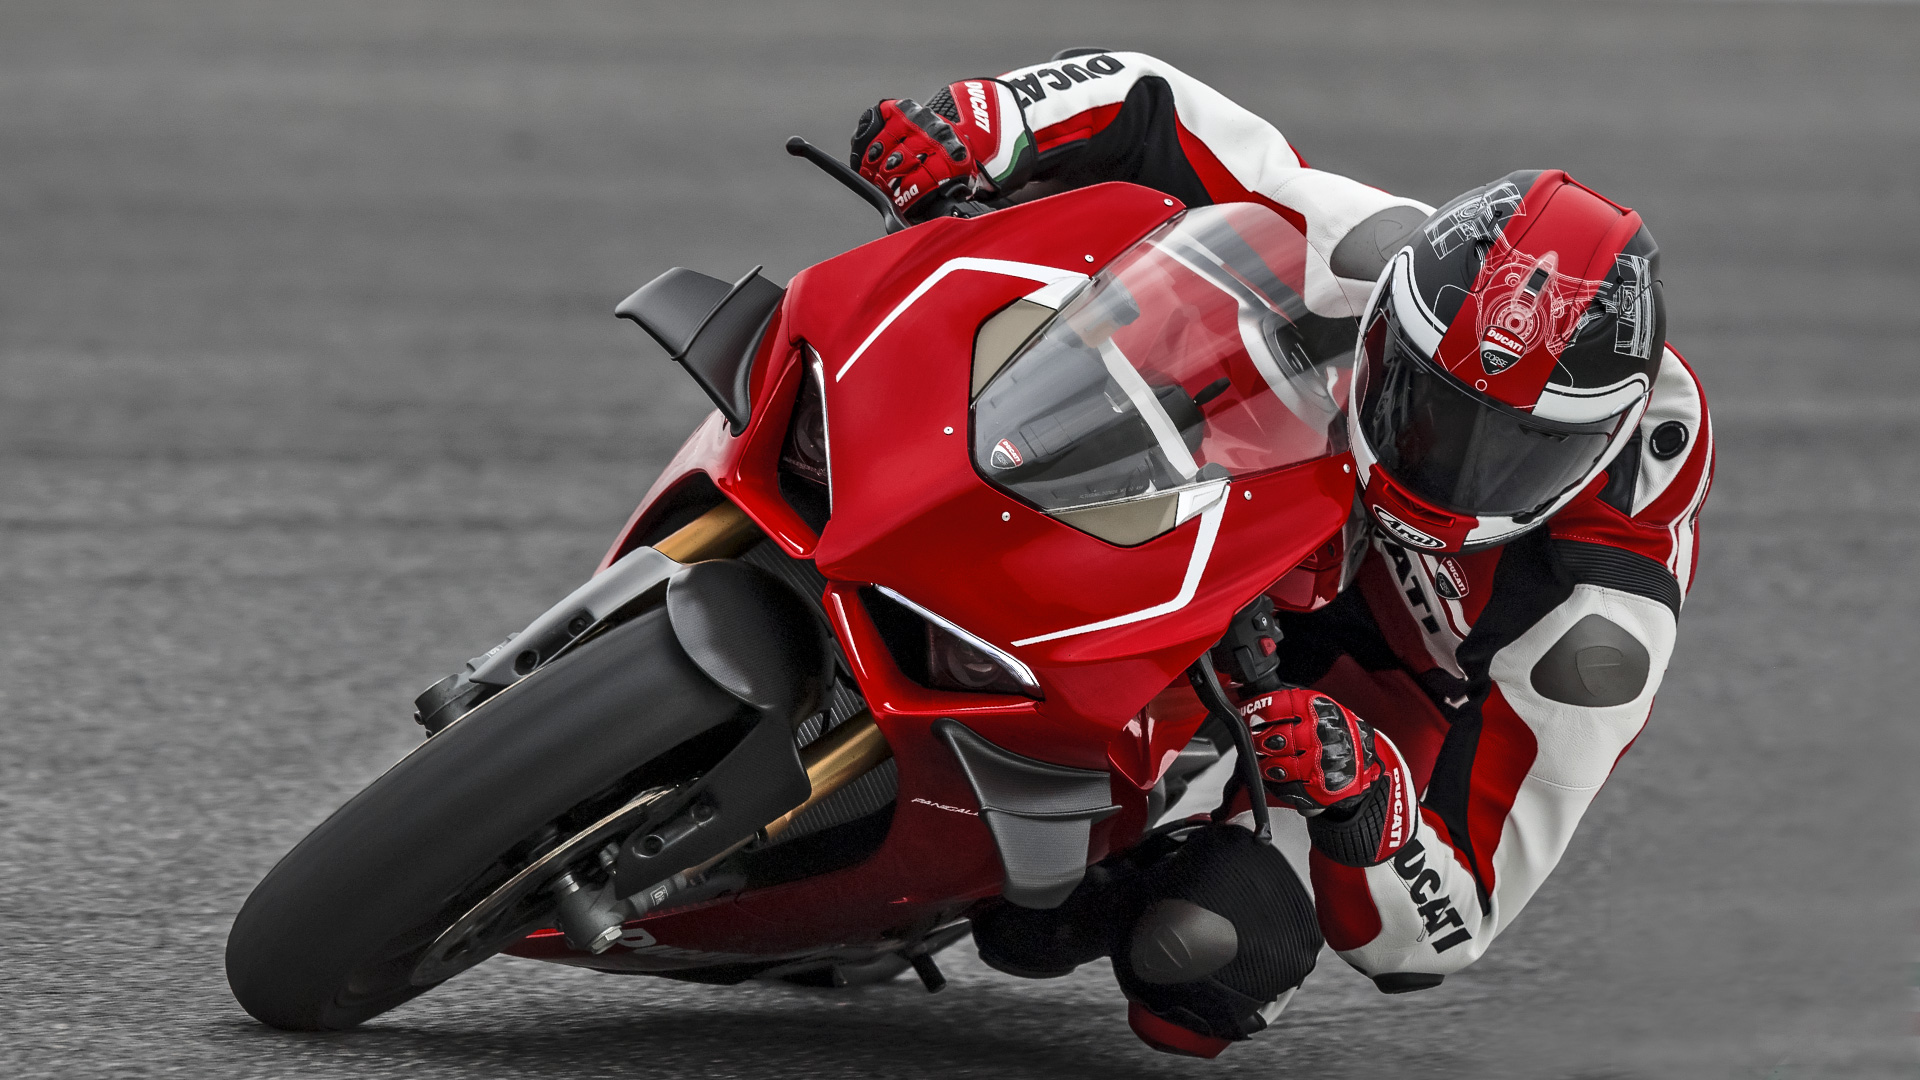 2021 Ducati Panigale V4 R [Specs, Features, Photos]